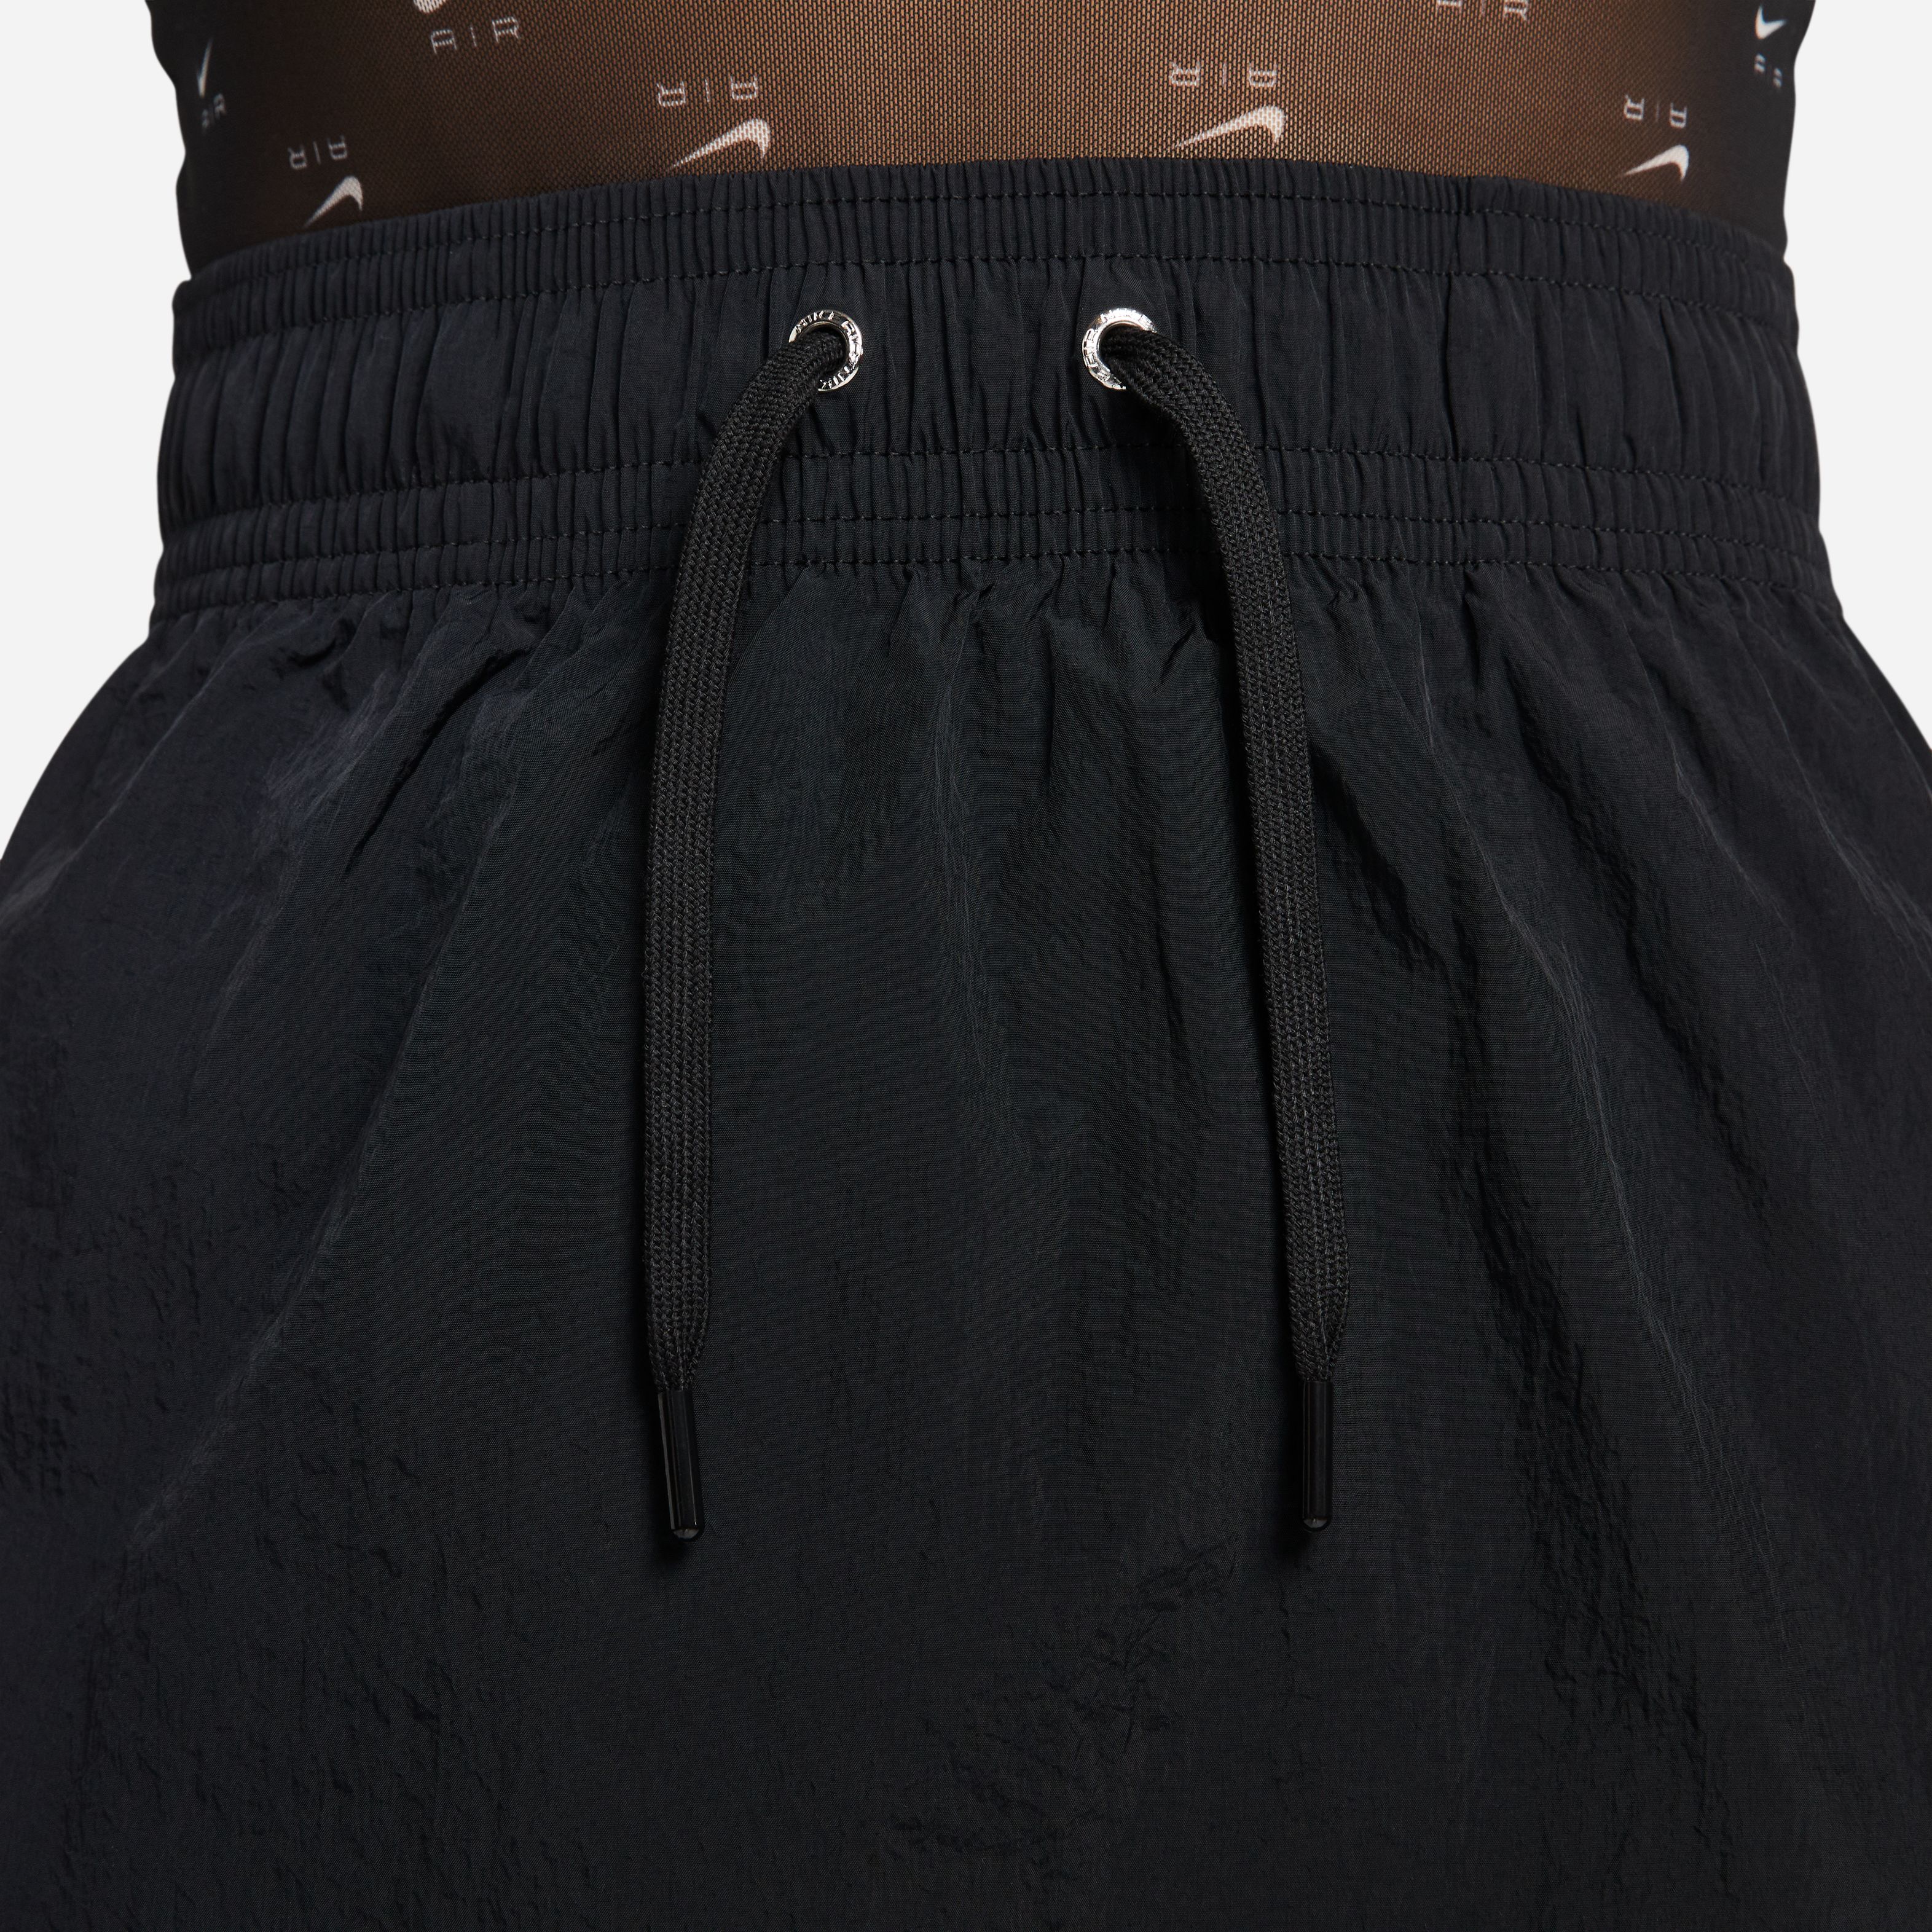 Air High-Waisted Woven Miniskirt - Black/White